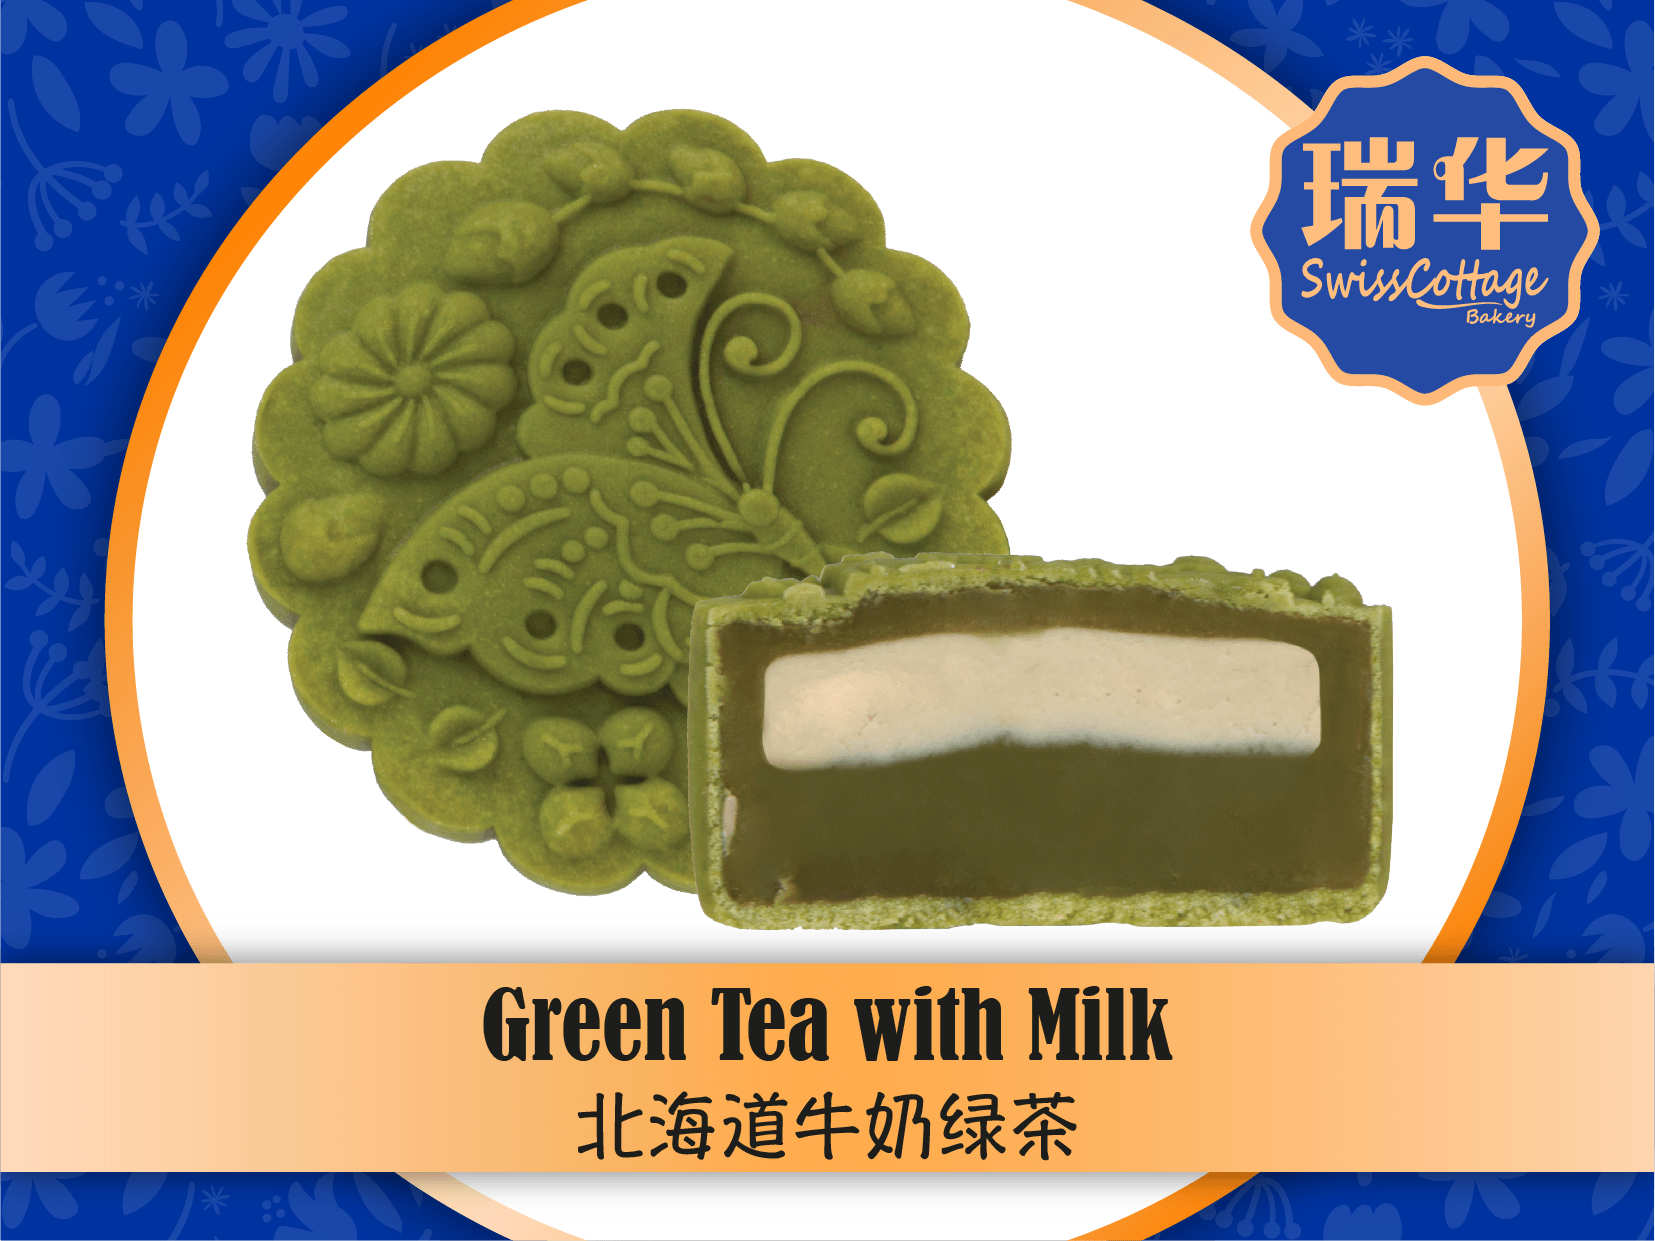 Green Tea with Milk (SC) – Swiss Cottage Bakery